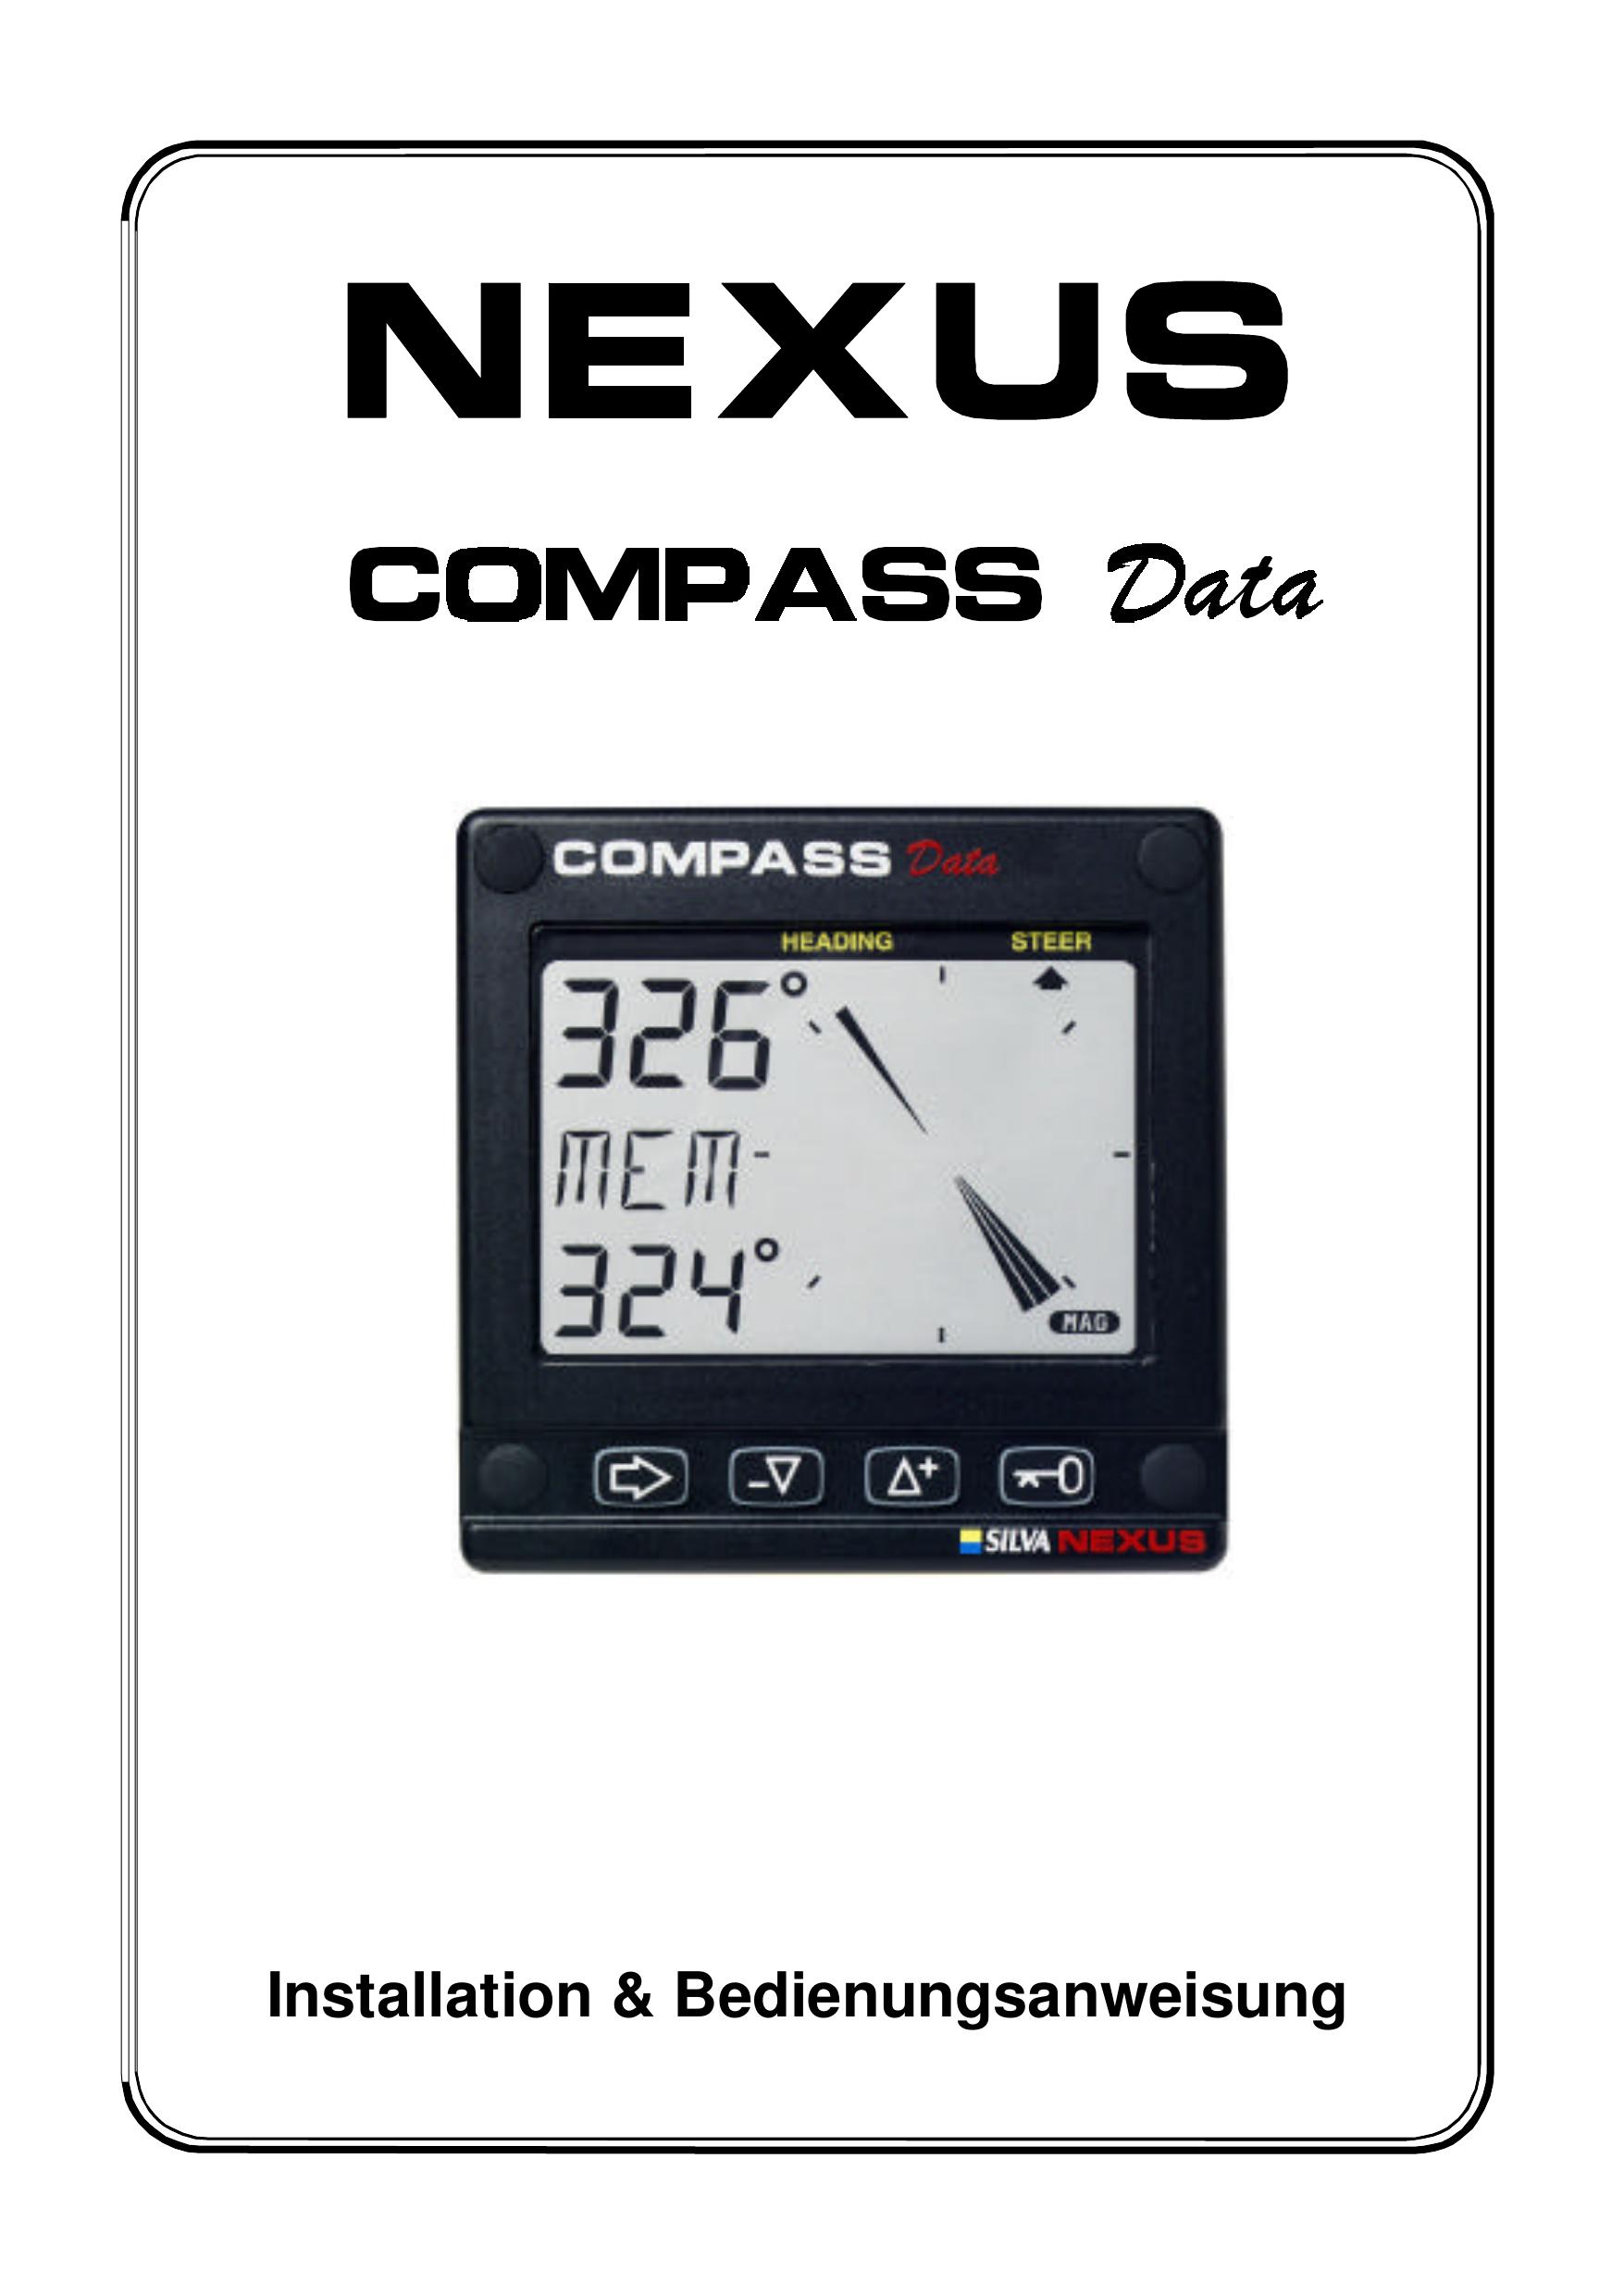 Nexus 21 Compass Data Boating Equipment User Manual